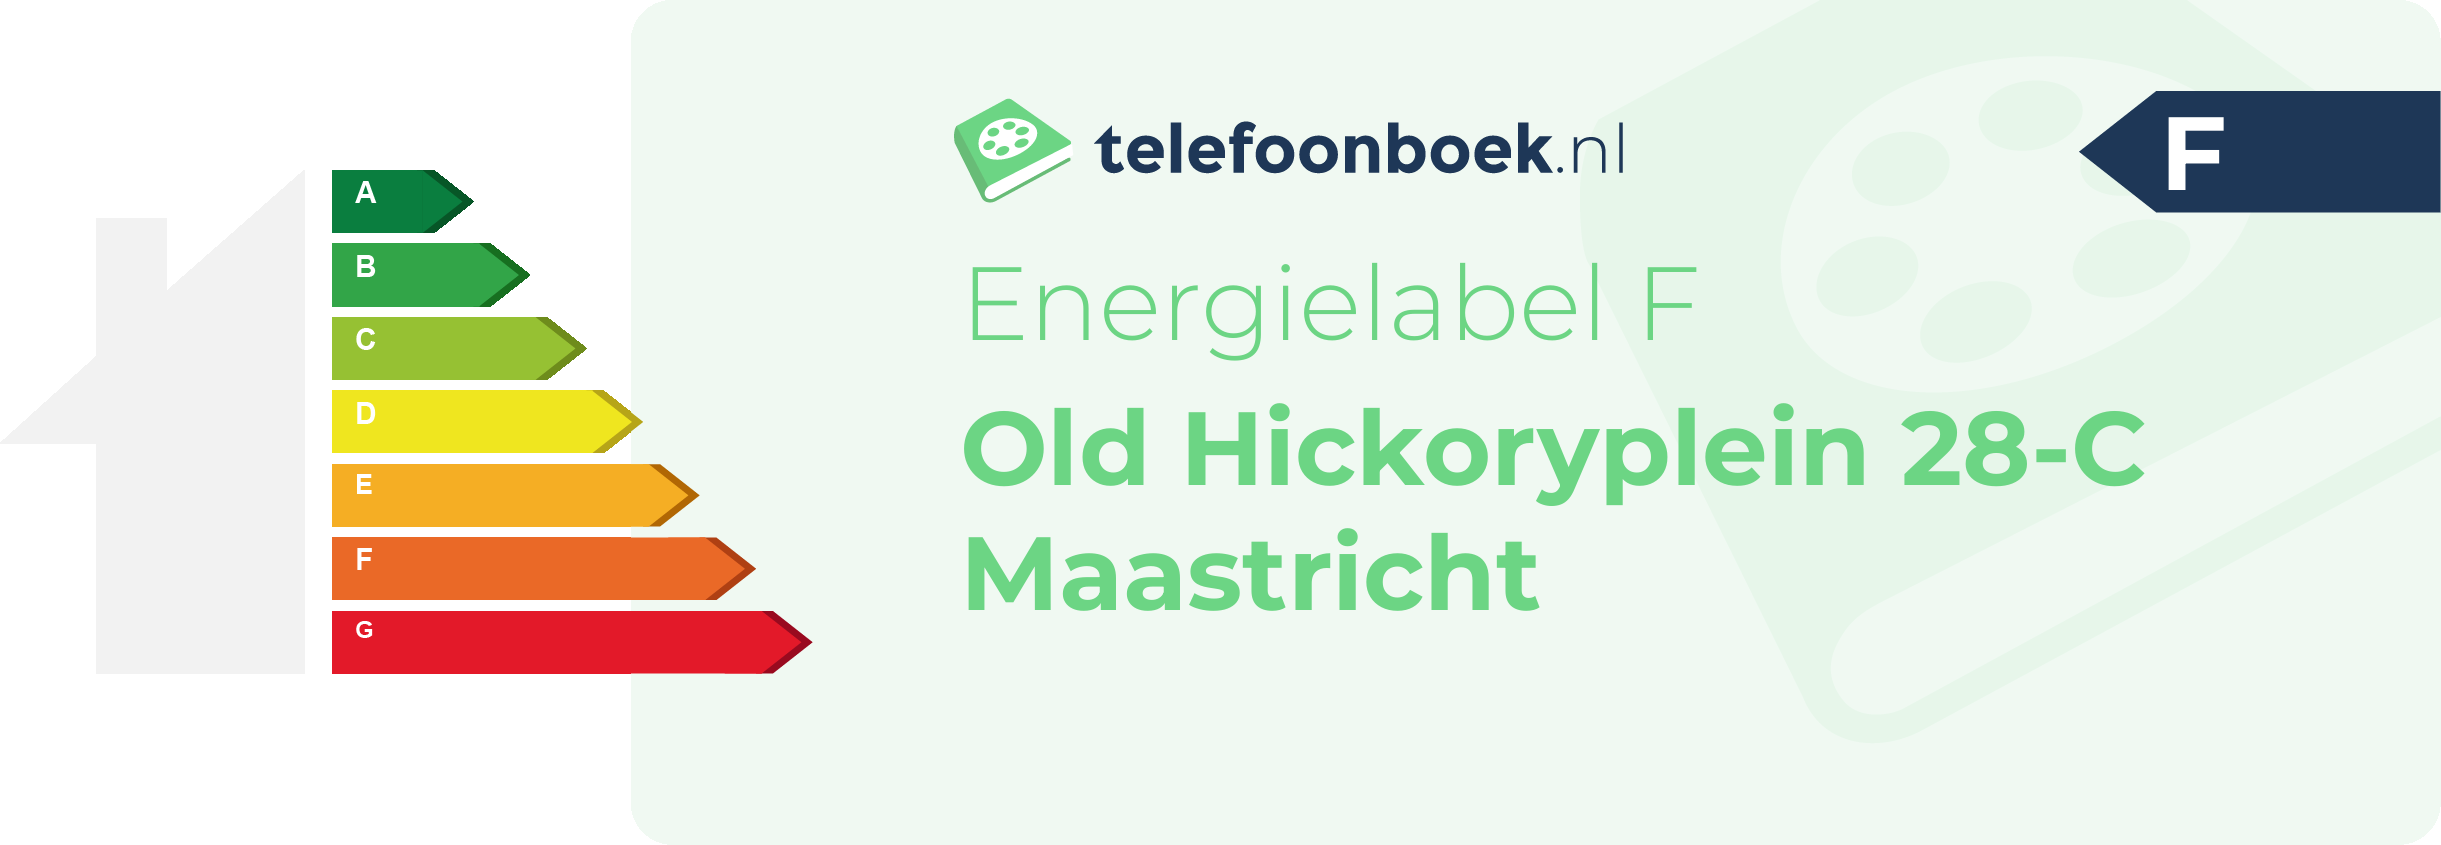 Energielabel Old Hickoryplein 28-C Maastricht